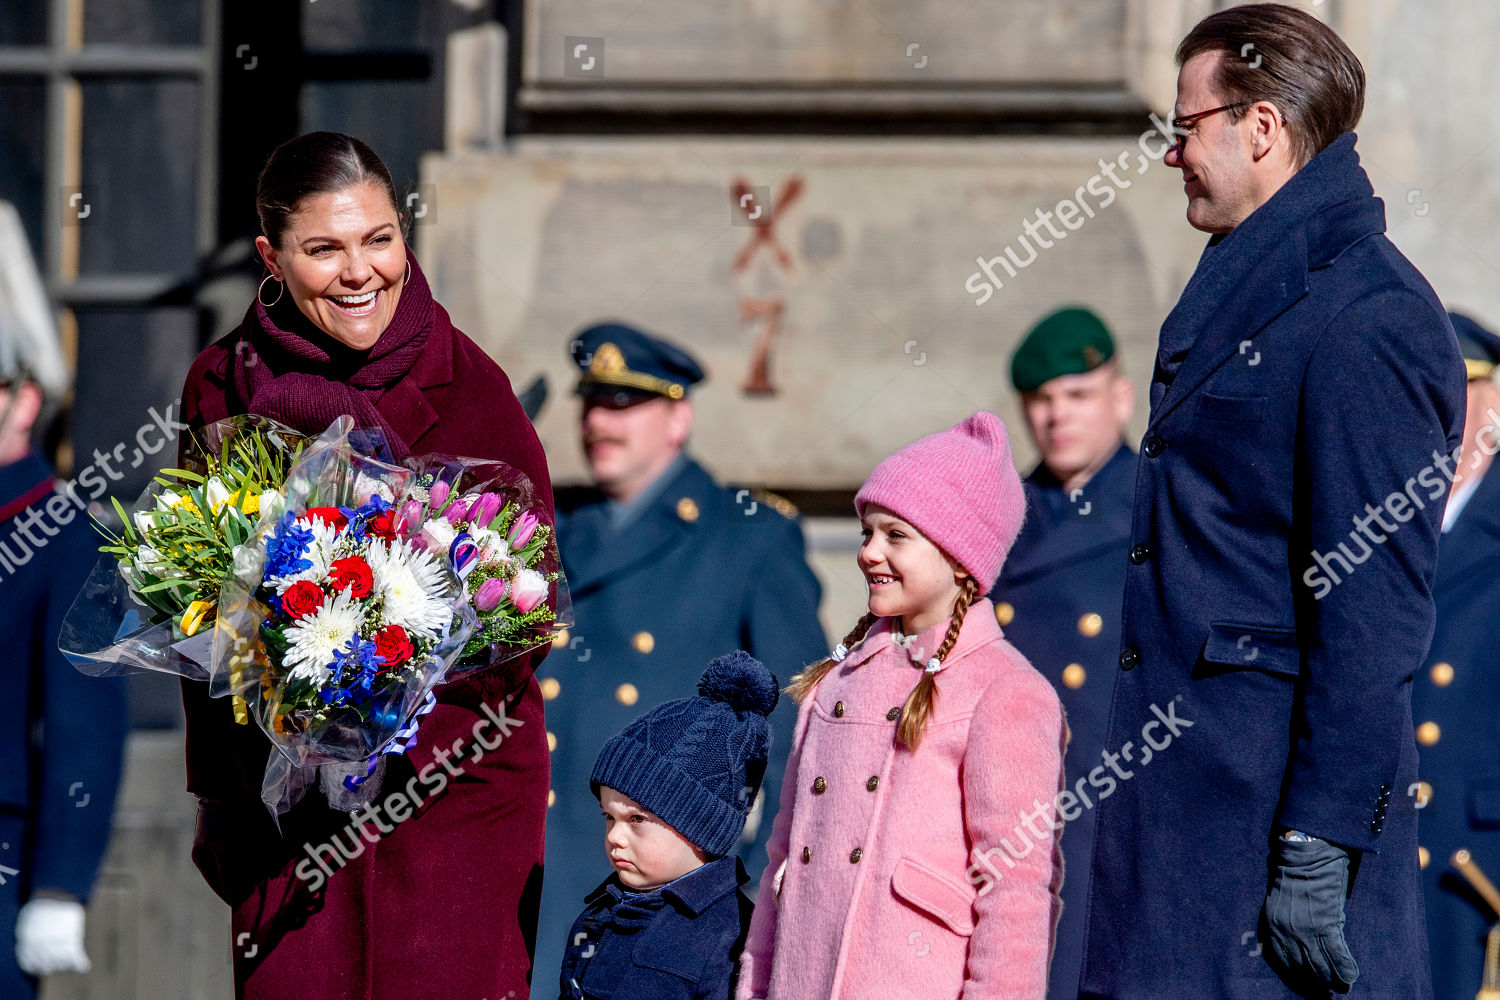 crown-princess-victoria-name-day-celebrations-stockholm-sweden-shutterstock-editorial-10151872aq.jpg